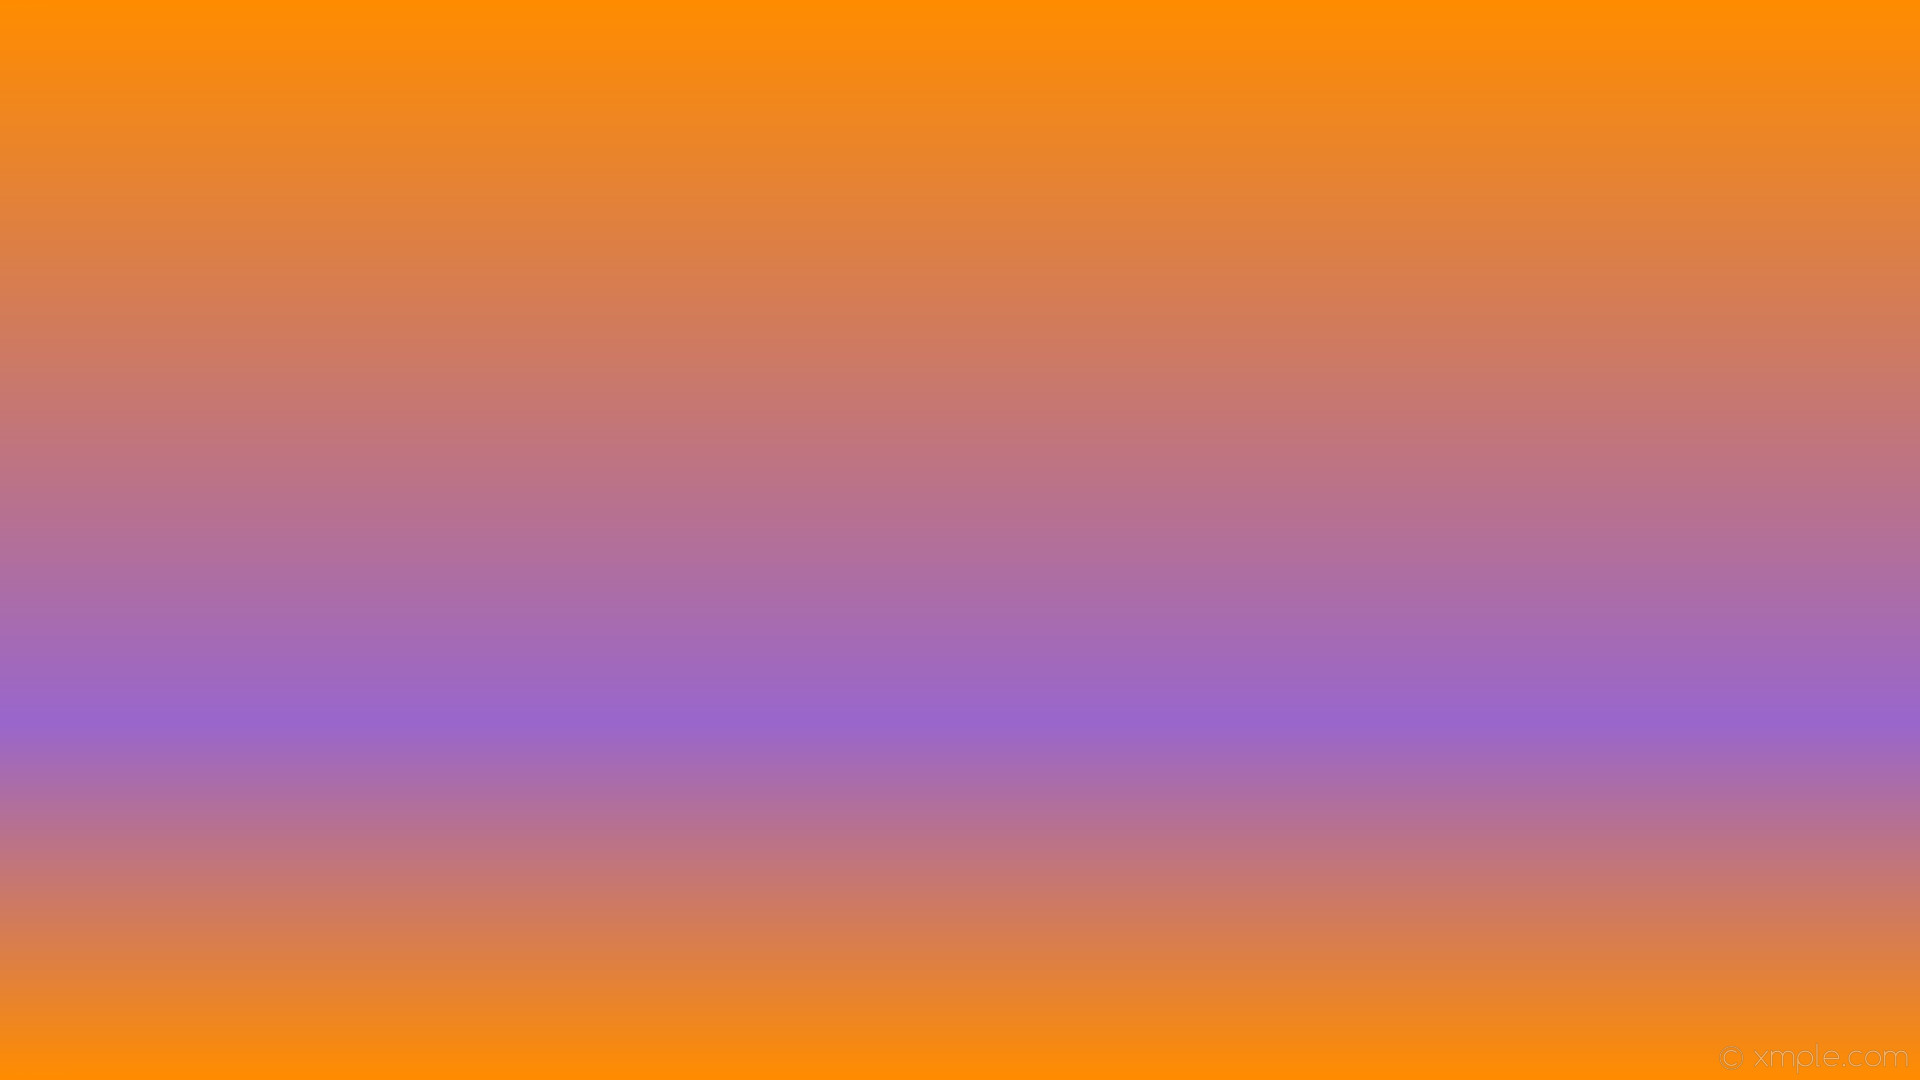 1920x1080 wallpaper highlight linear gradient orange purple dark orange amethyst  #ff8c00 #9966cc 270Â° 33